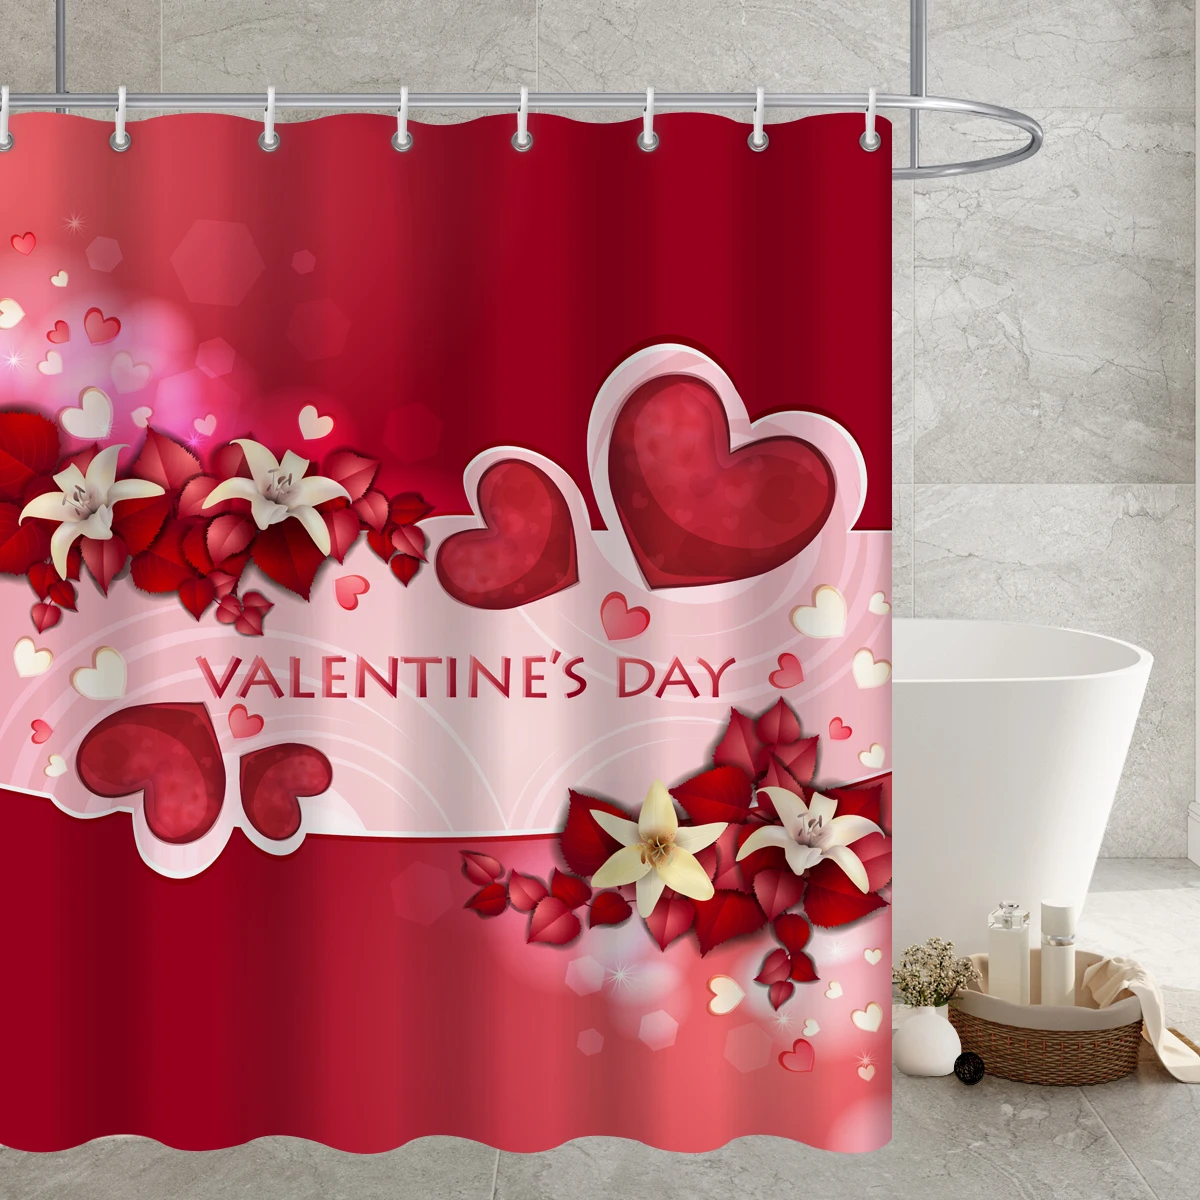 Hearts Shower Curtain, Valentines Day Falling Red Hearts Shower Curtains For Bathroom, Heart Cloth Fabric Bathroom Decor Set